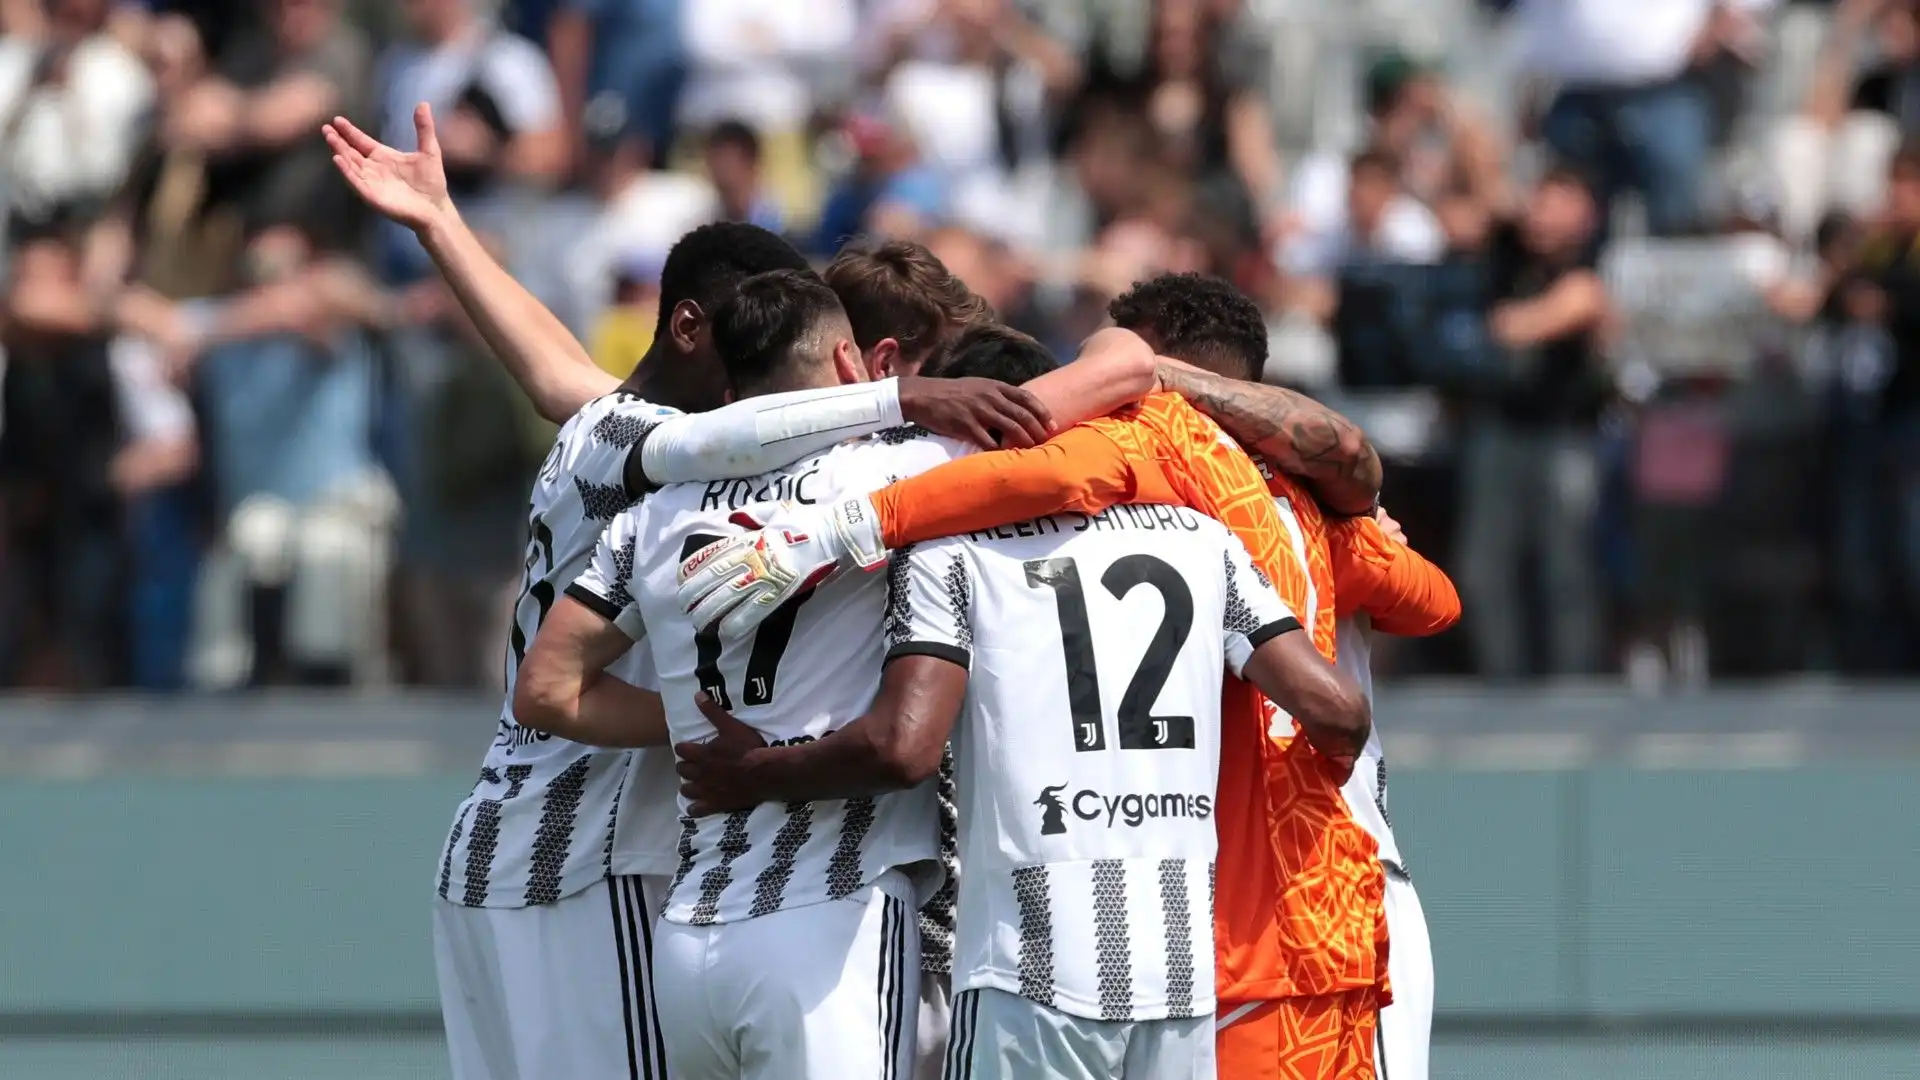 La Juventus vince il big match contro l'Atalanta: le foto più belle